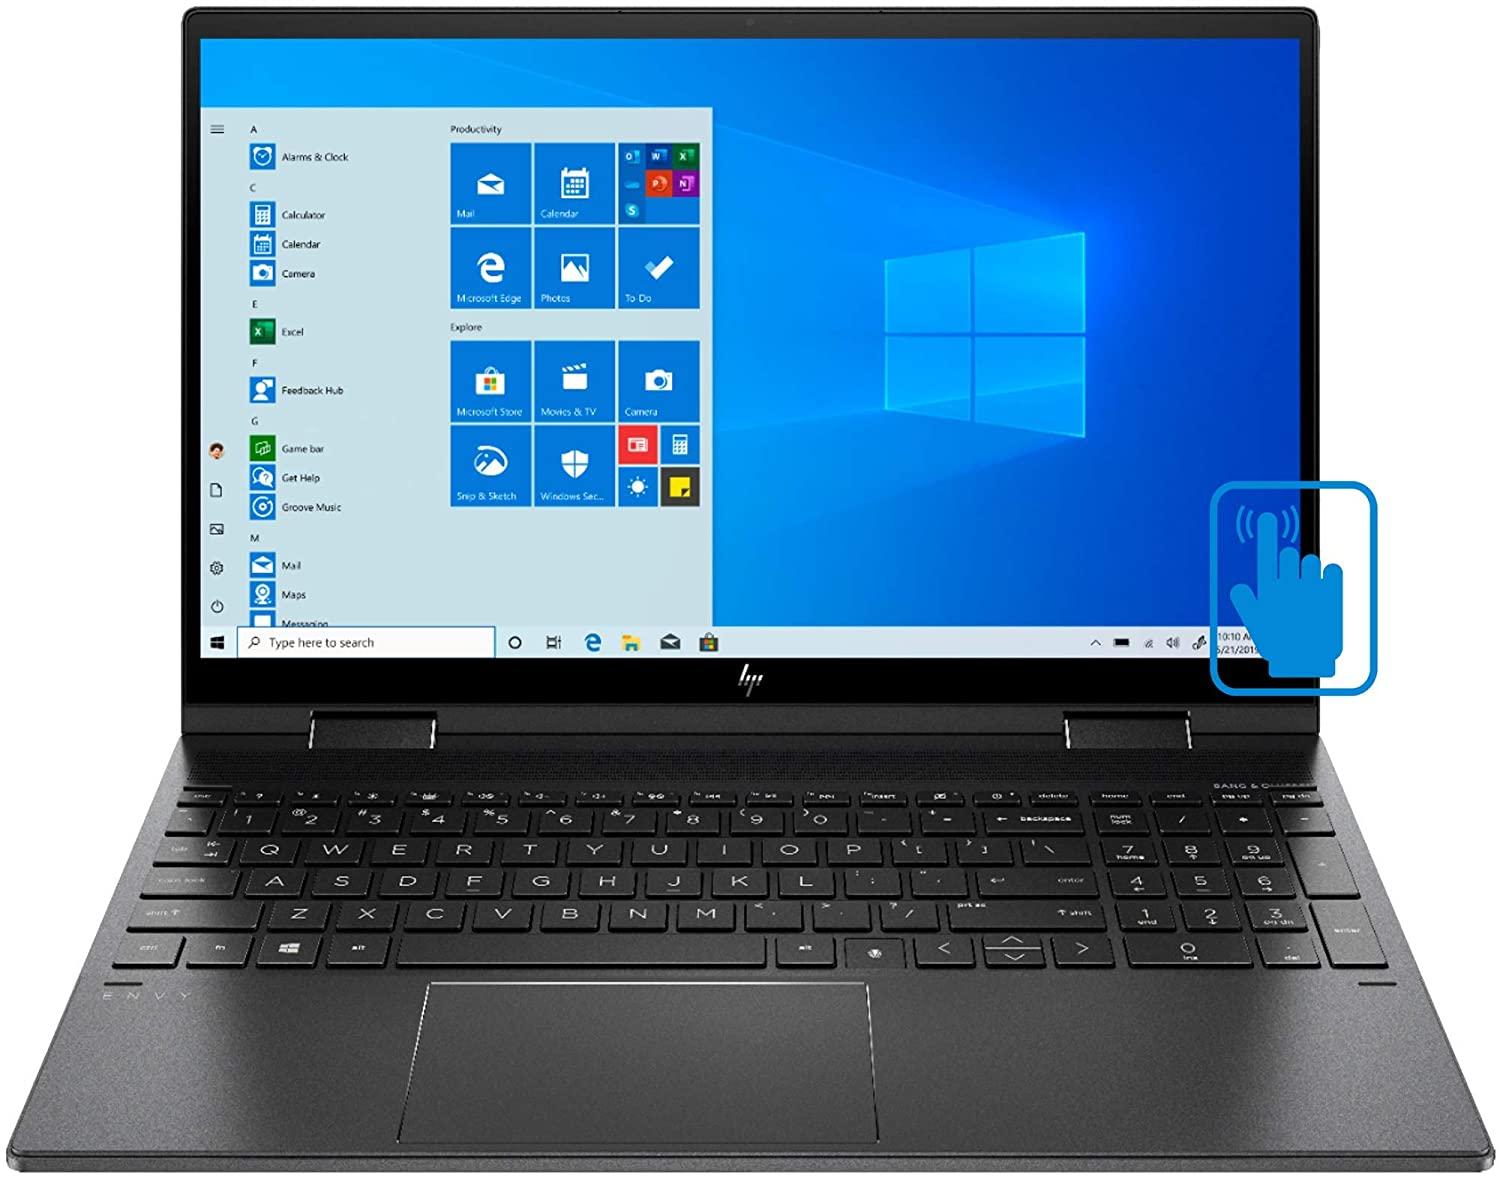 HP Envy x360 15.6 Ryzen 7 16GB 2-in-1 Touchscreen Laptop for $899.99 Shipped